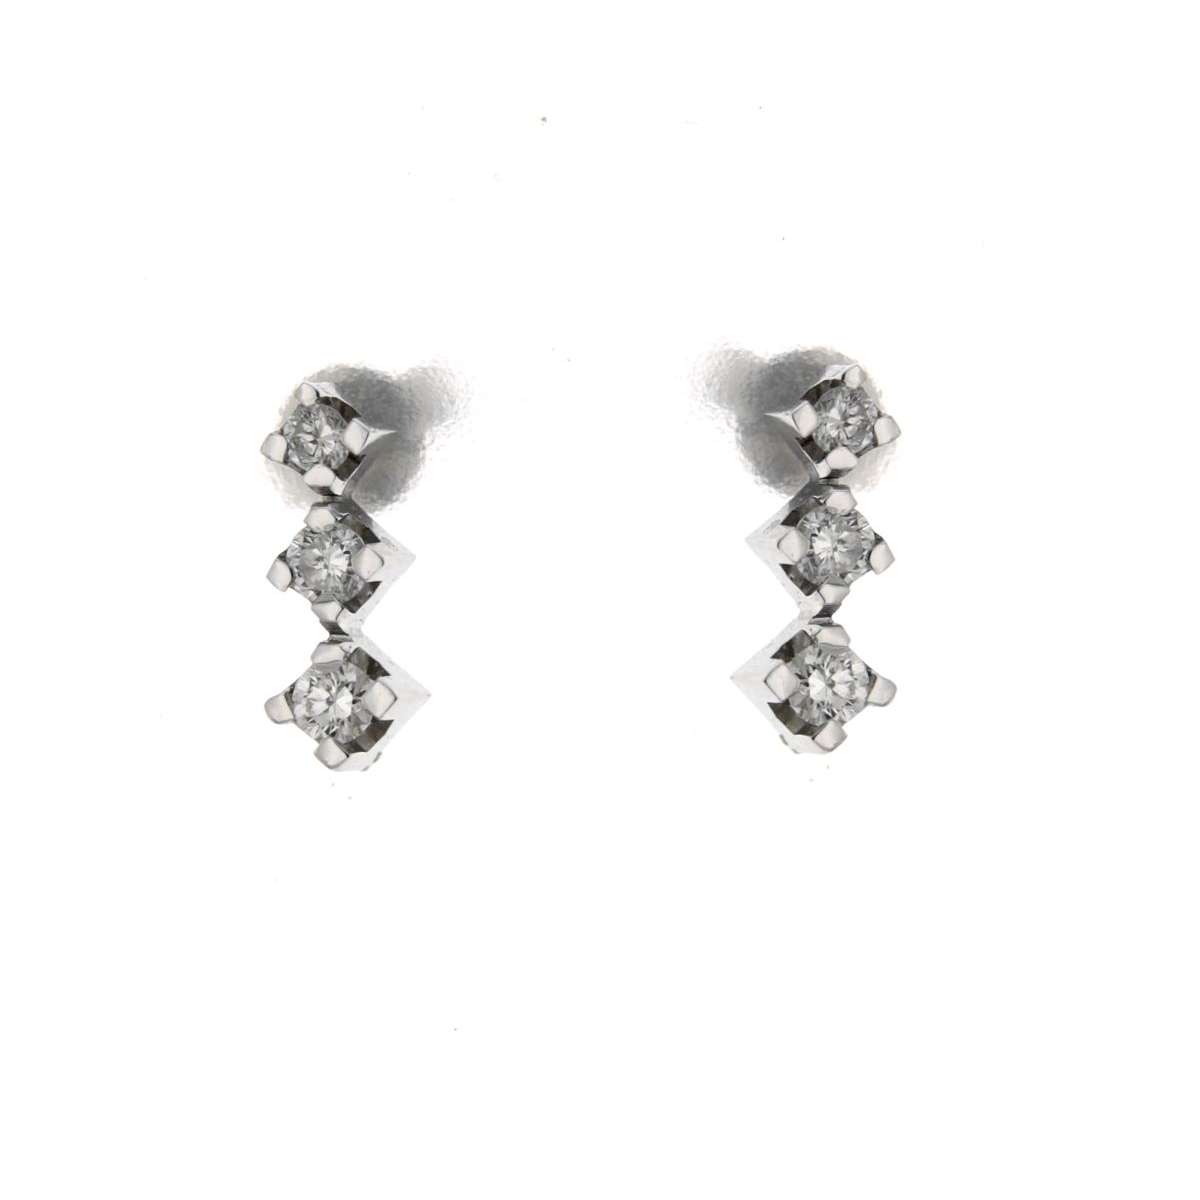 Trilogy earrings 0.35 carats diamonds G-VS1